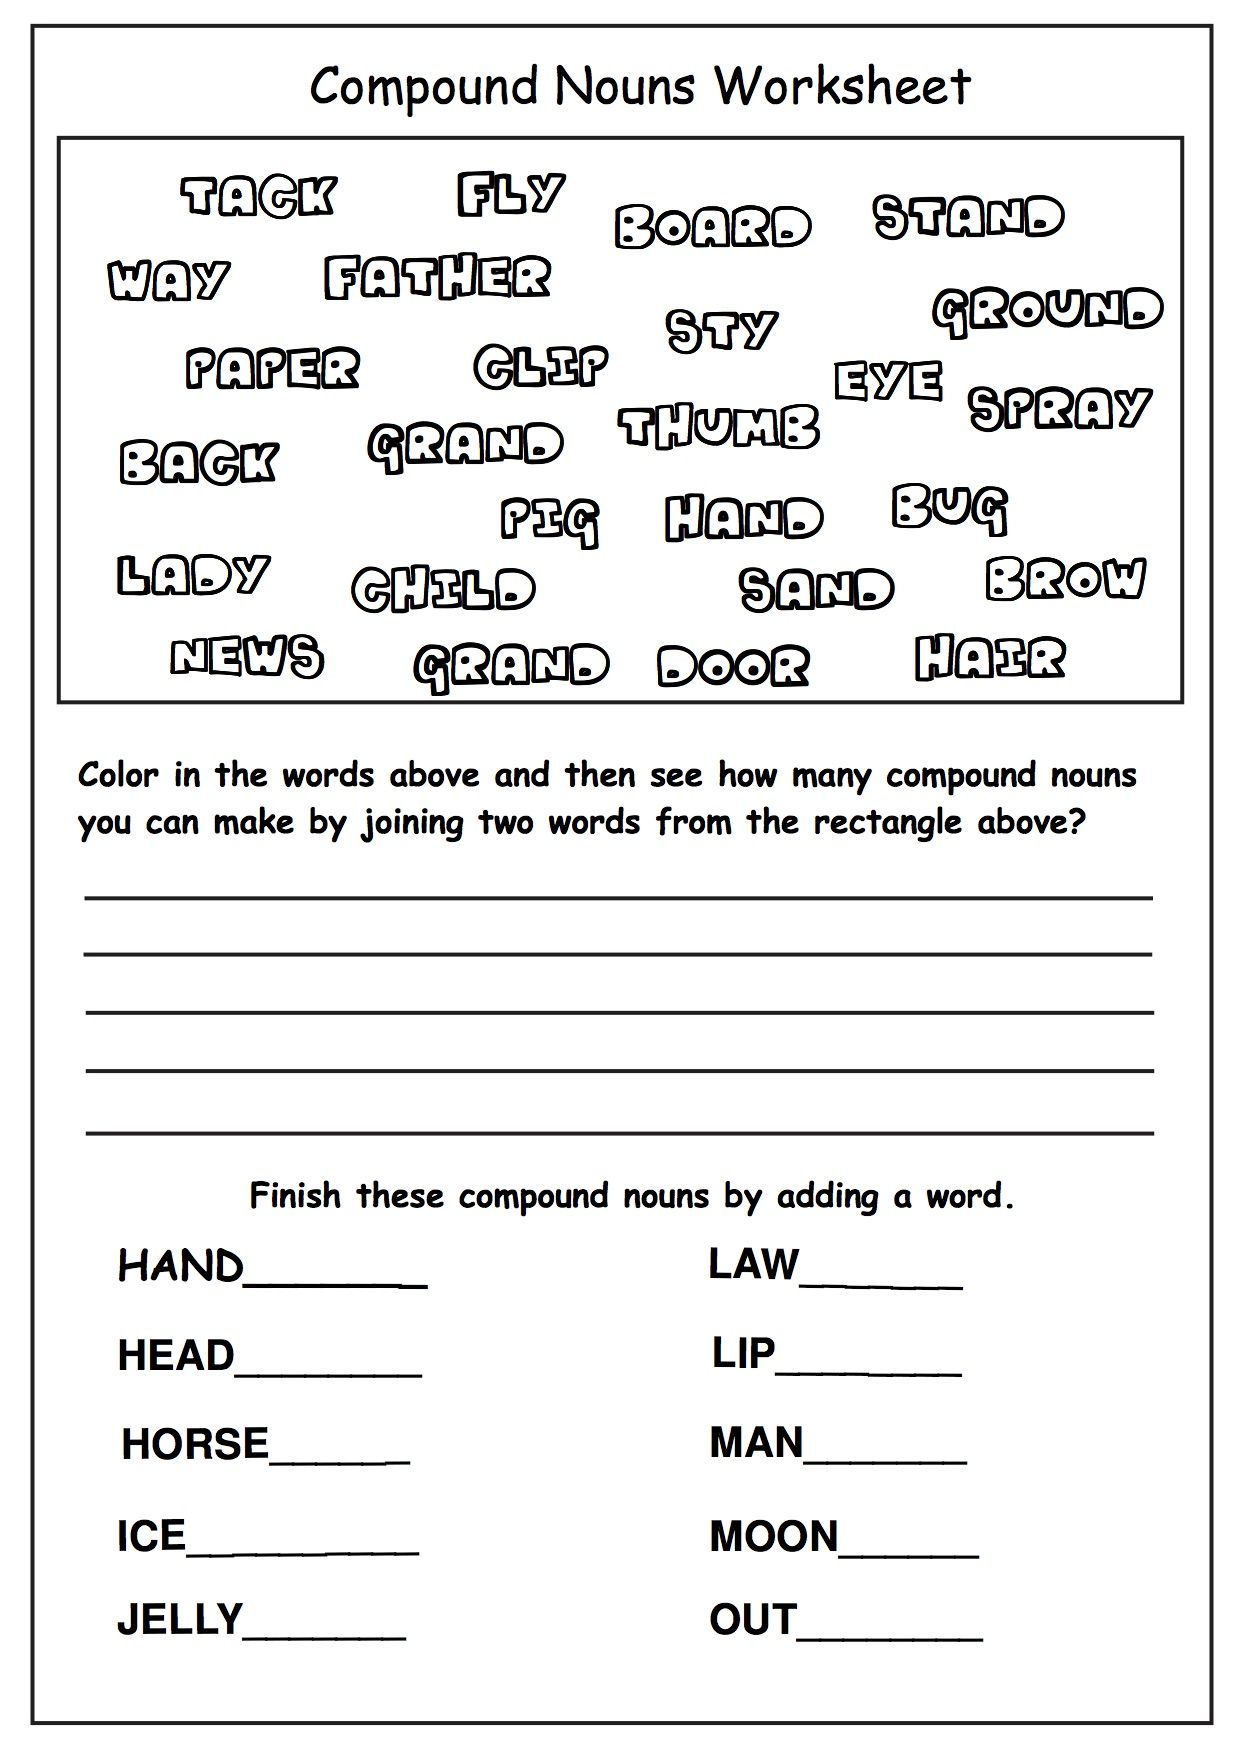 Compound Nouns Worksheet For Grade 3